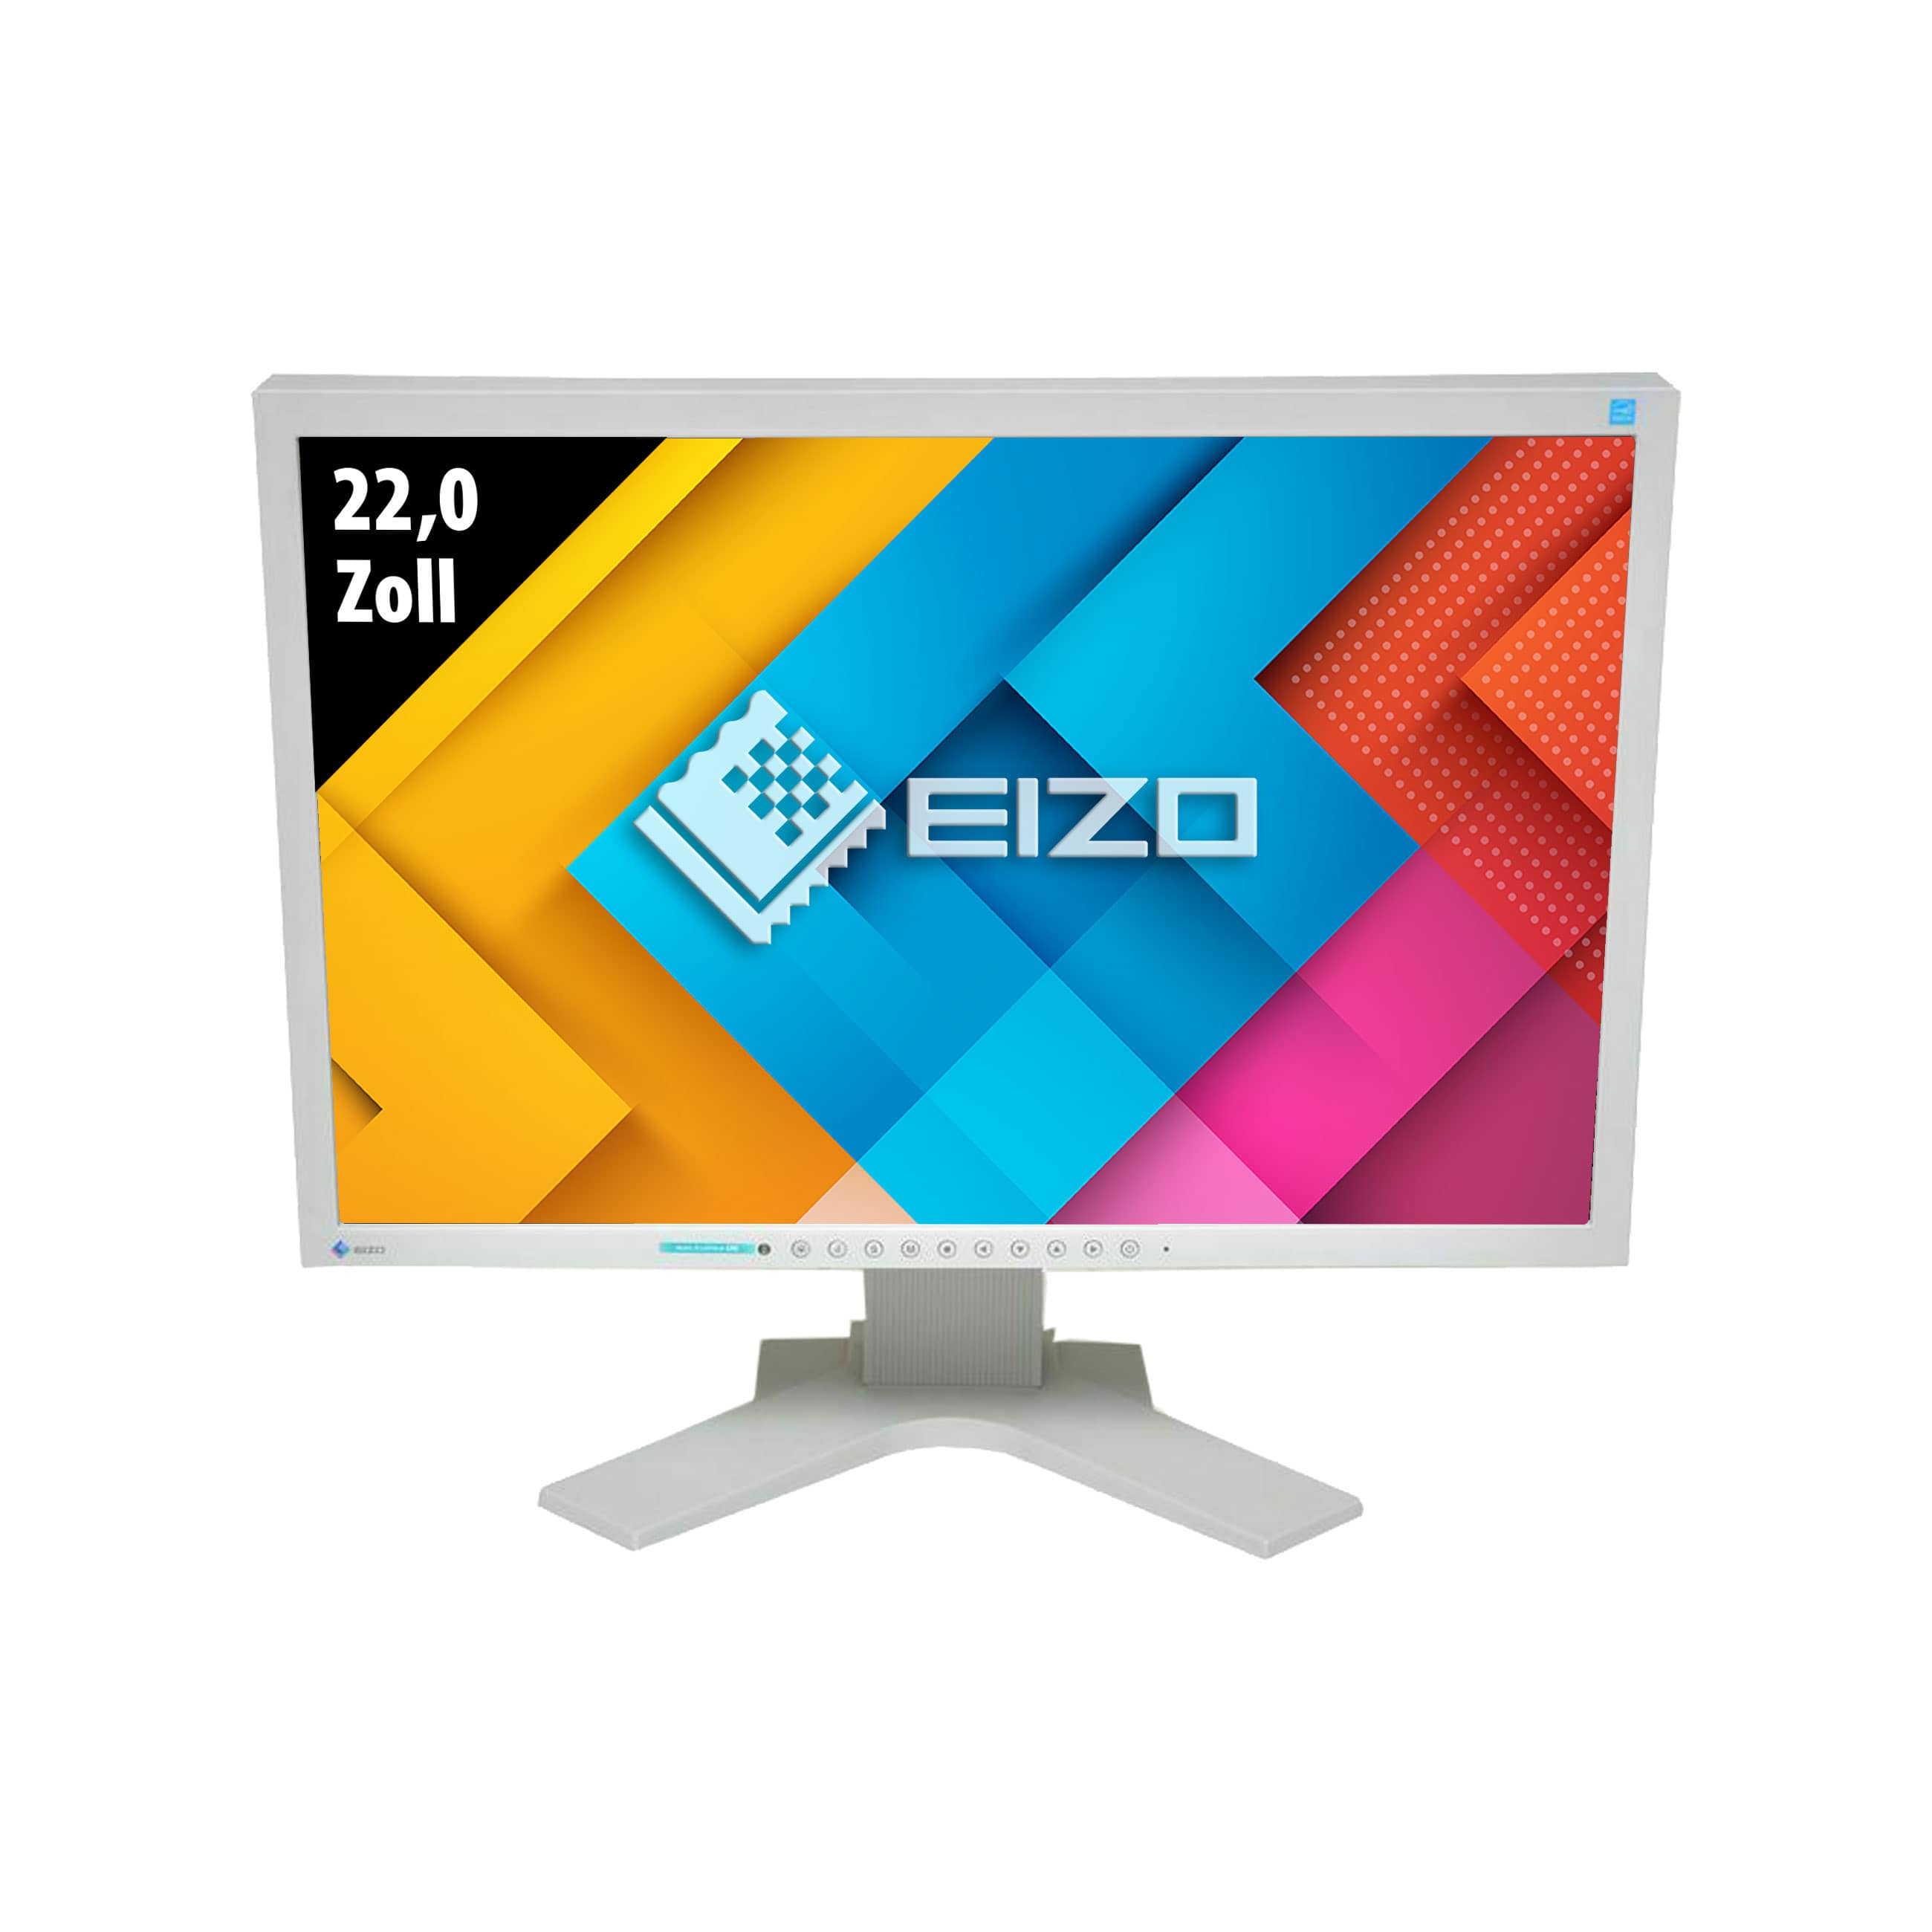 Eizo FlexScan S2202WH-GY - 1680 x 1050 - WSXGA+Gut - AfB-refurbished